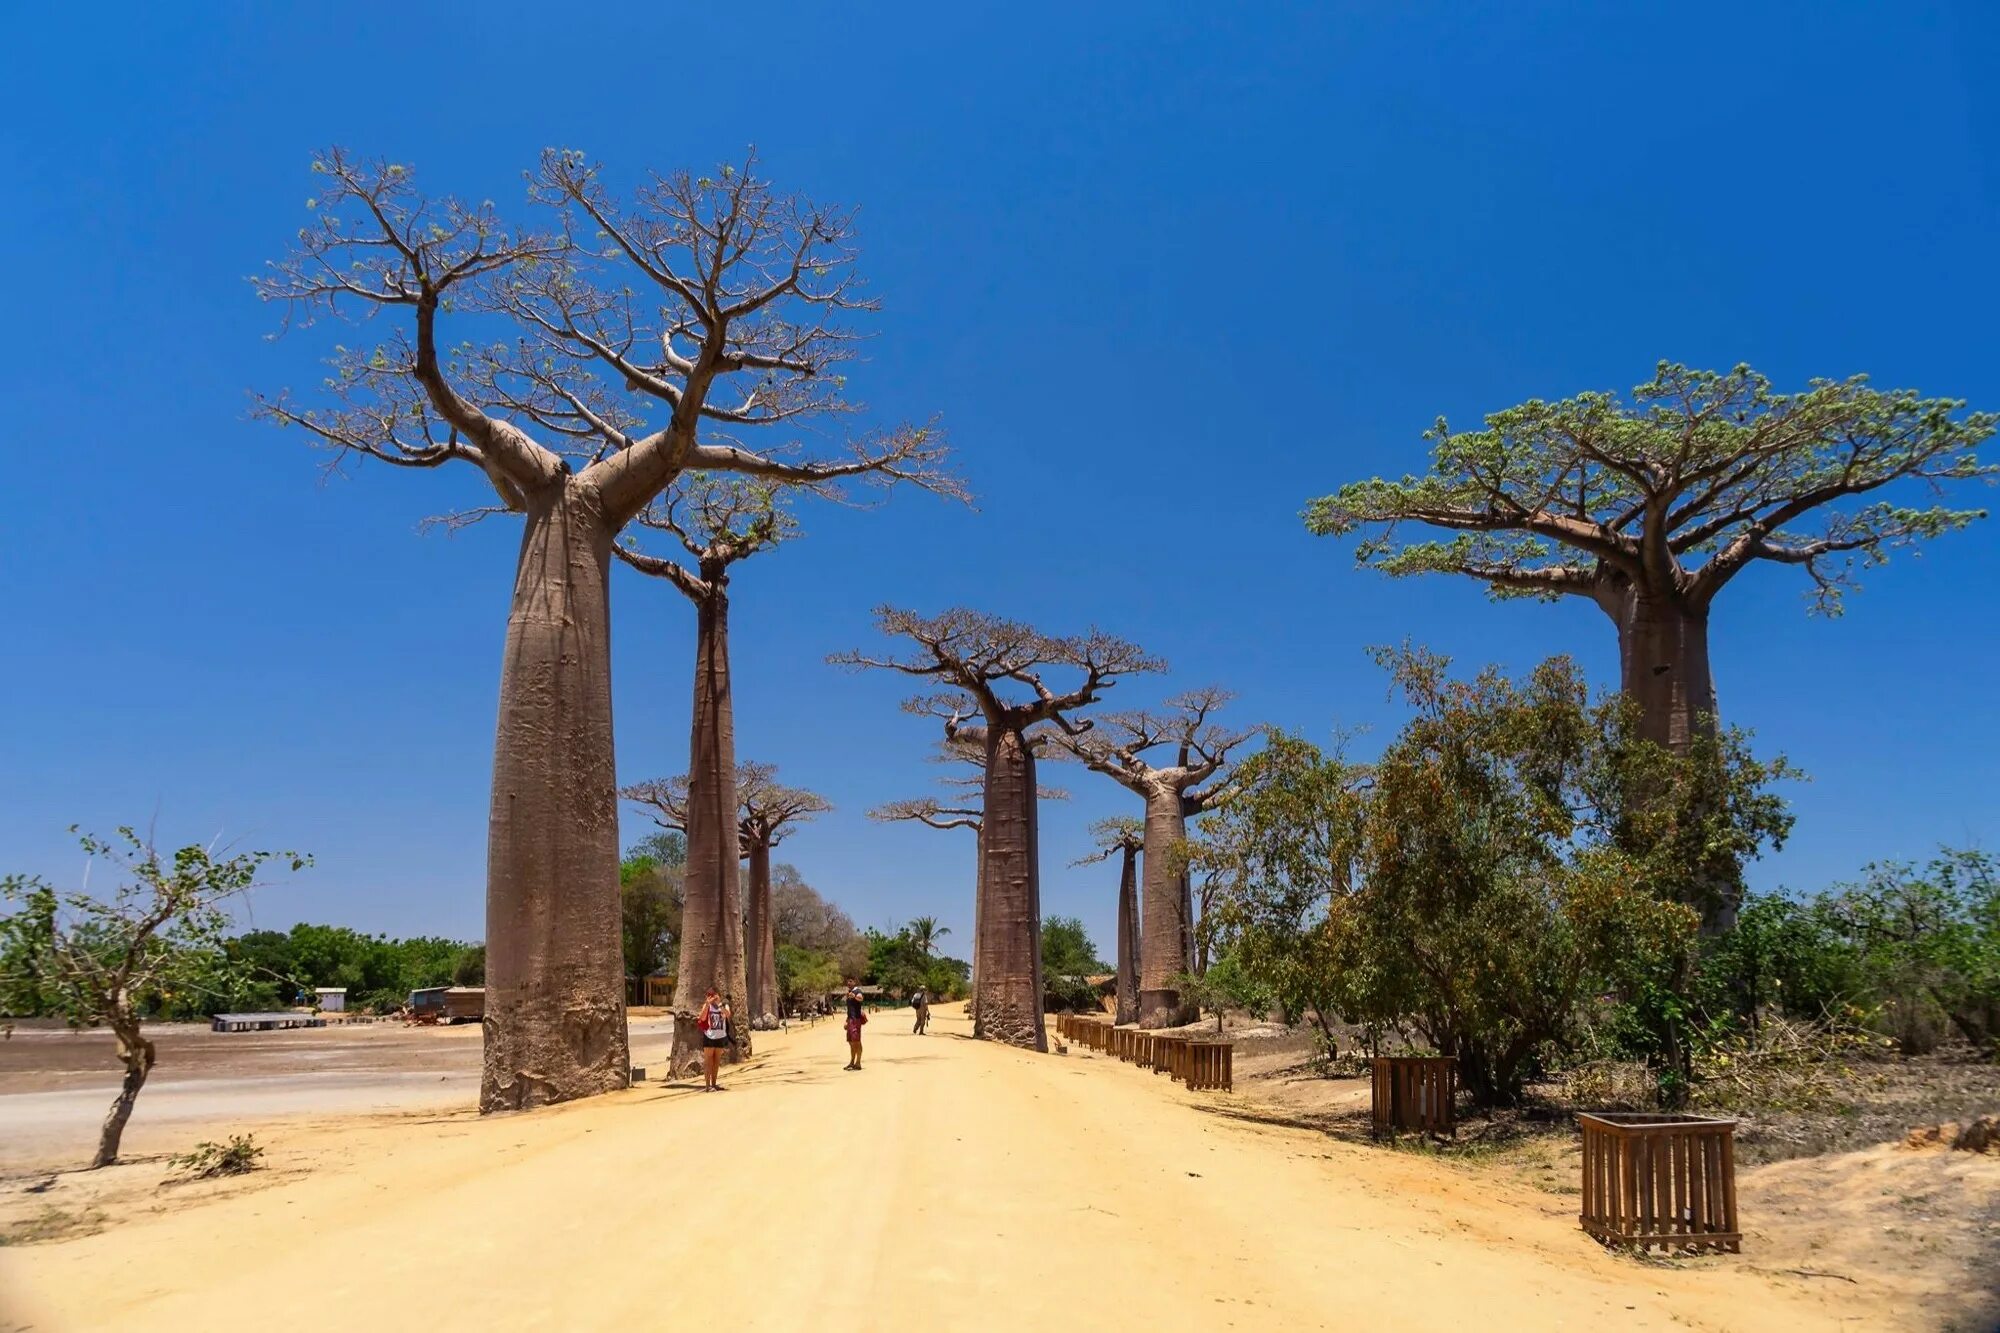 Ба баб. Аллея баобабов Мадагаскар. Проспект баобабов Мадагаскар. Аллея баобабов (Avenue of the Baobabs).